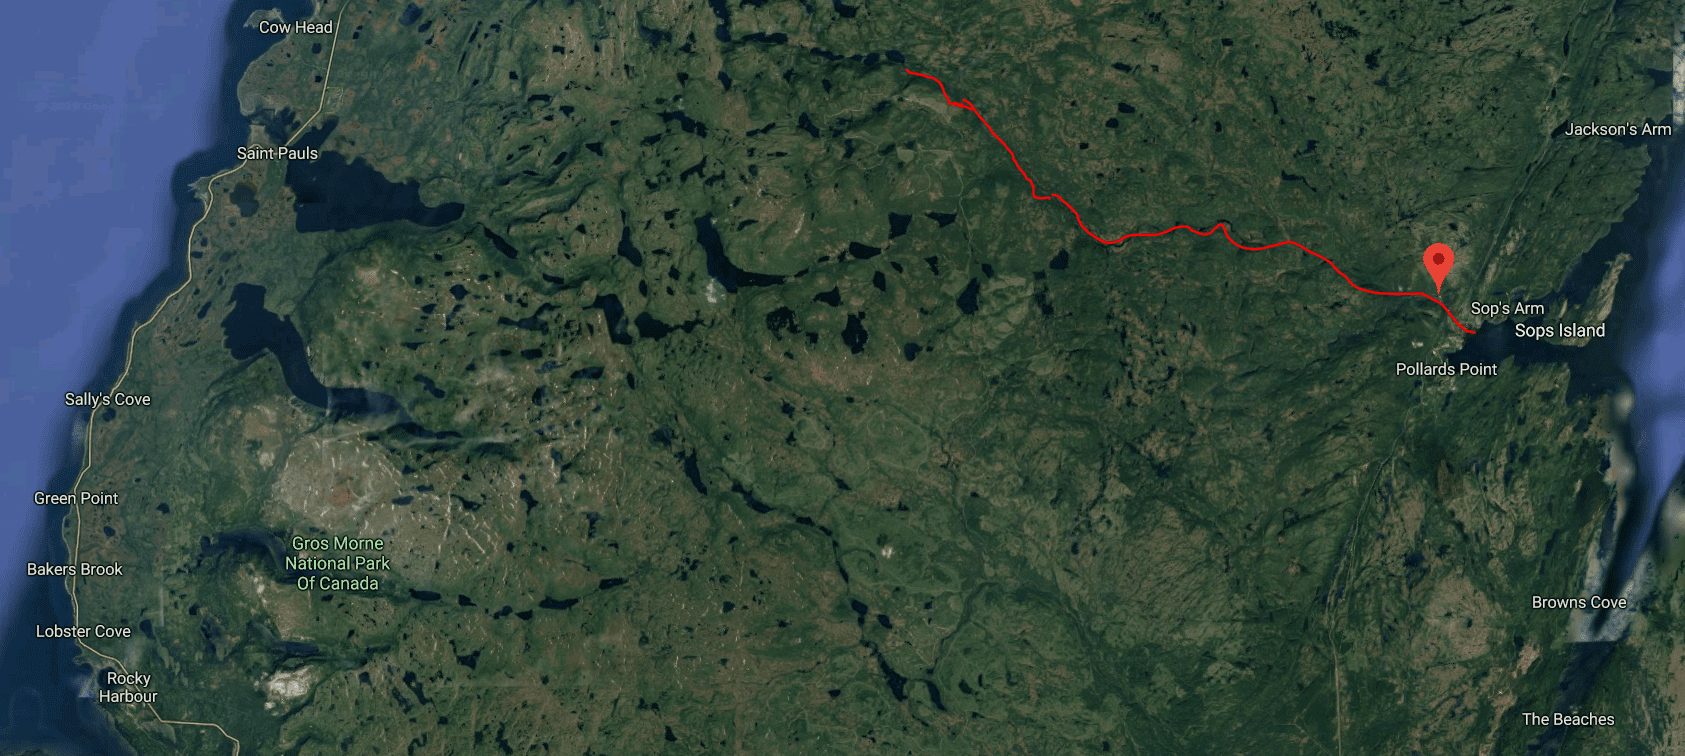 The LOcation of Main River in NewfoundlandA